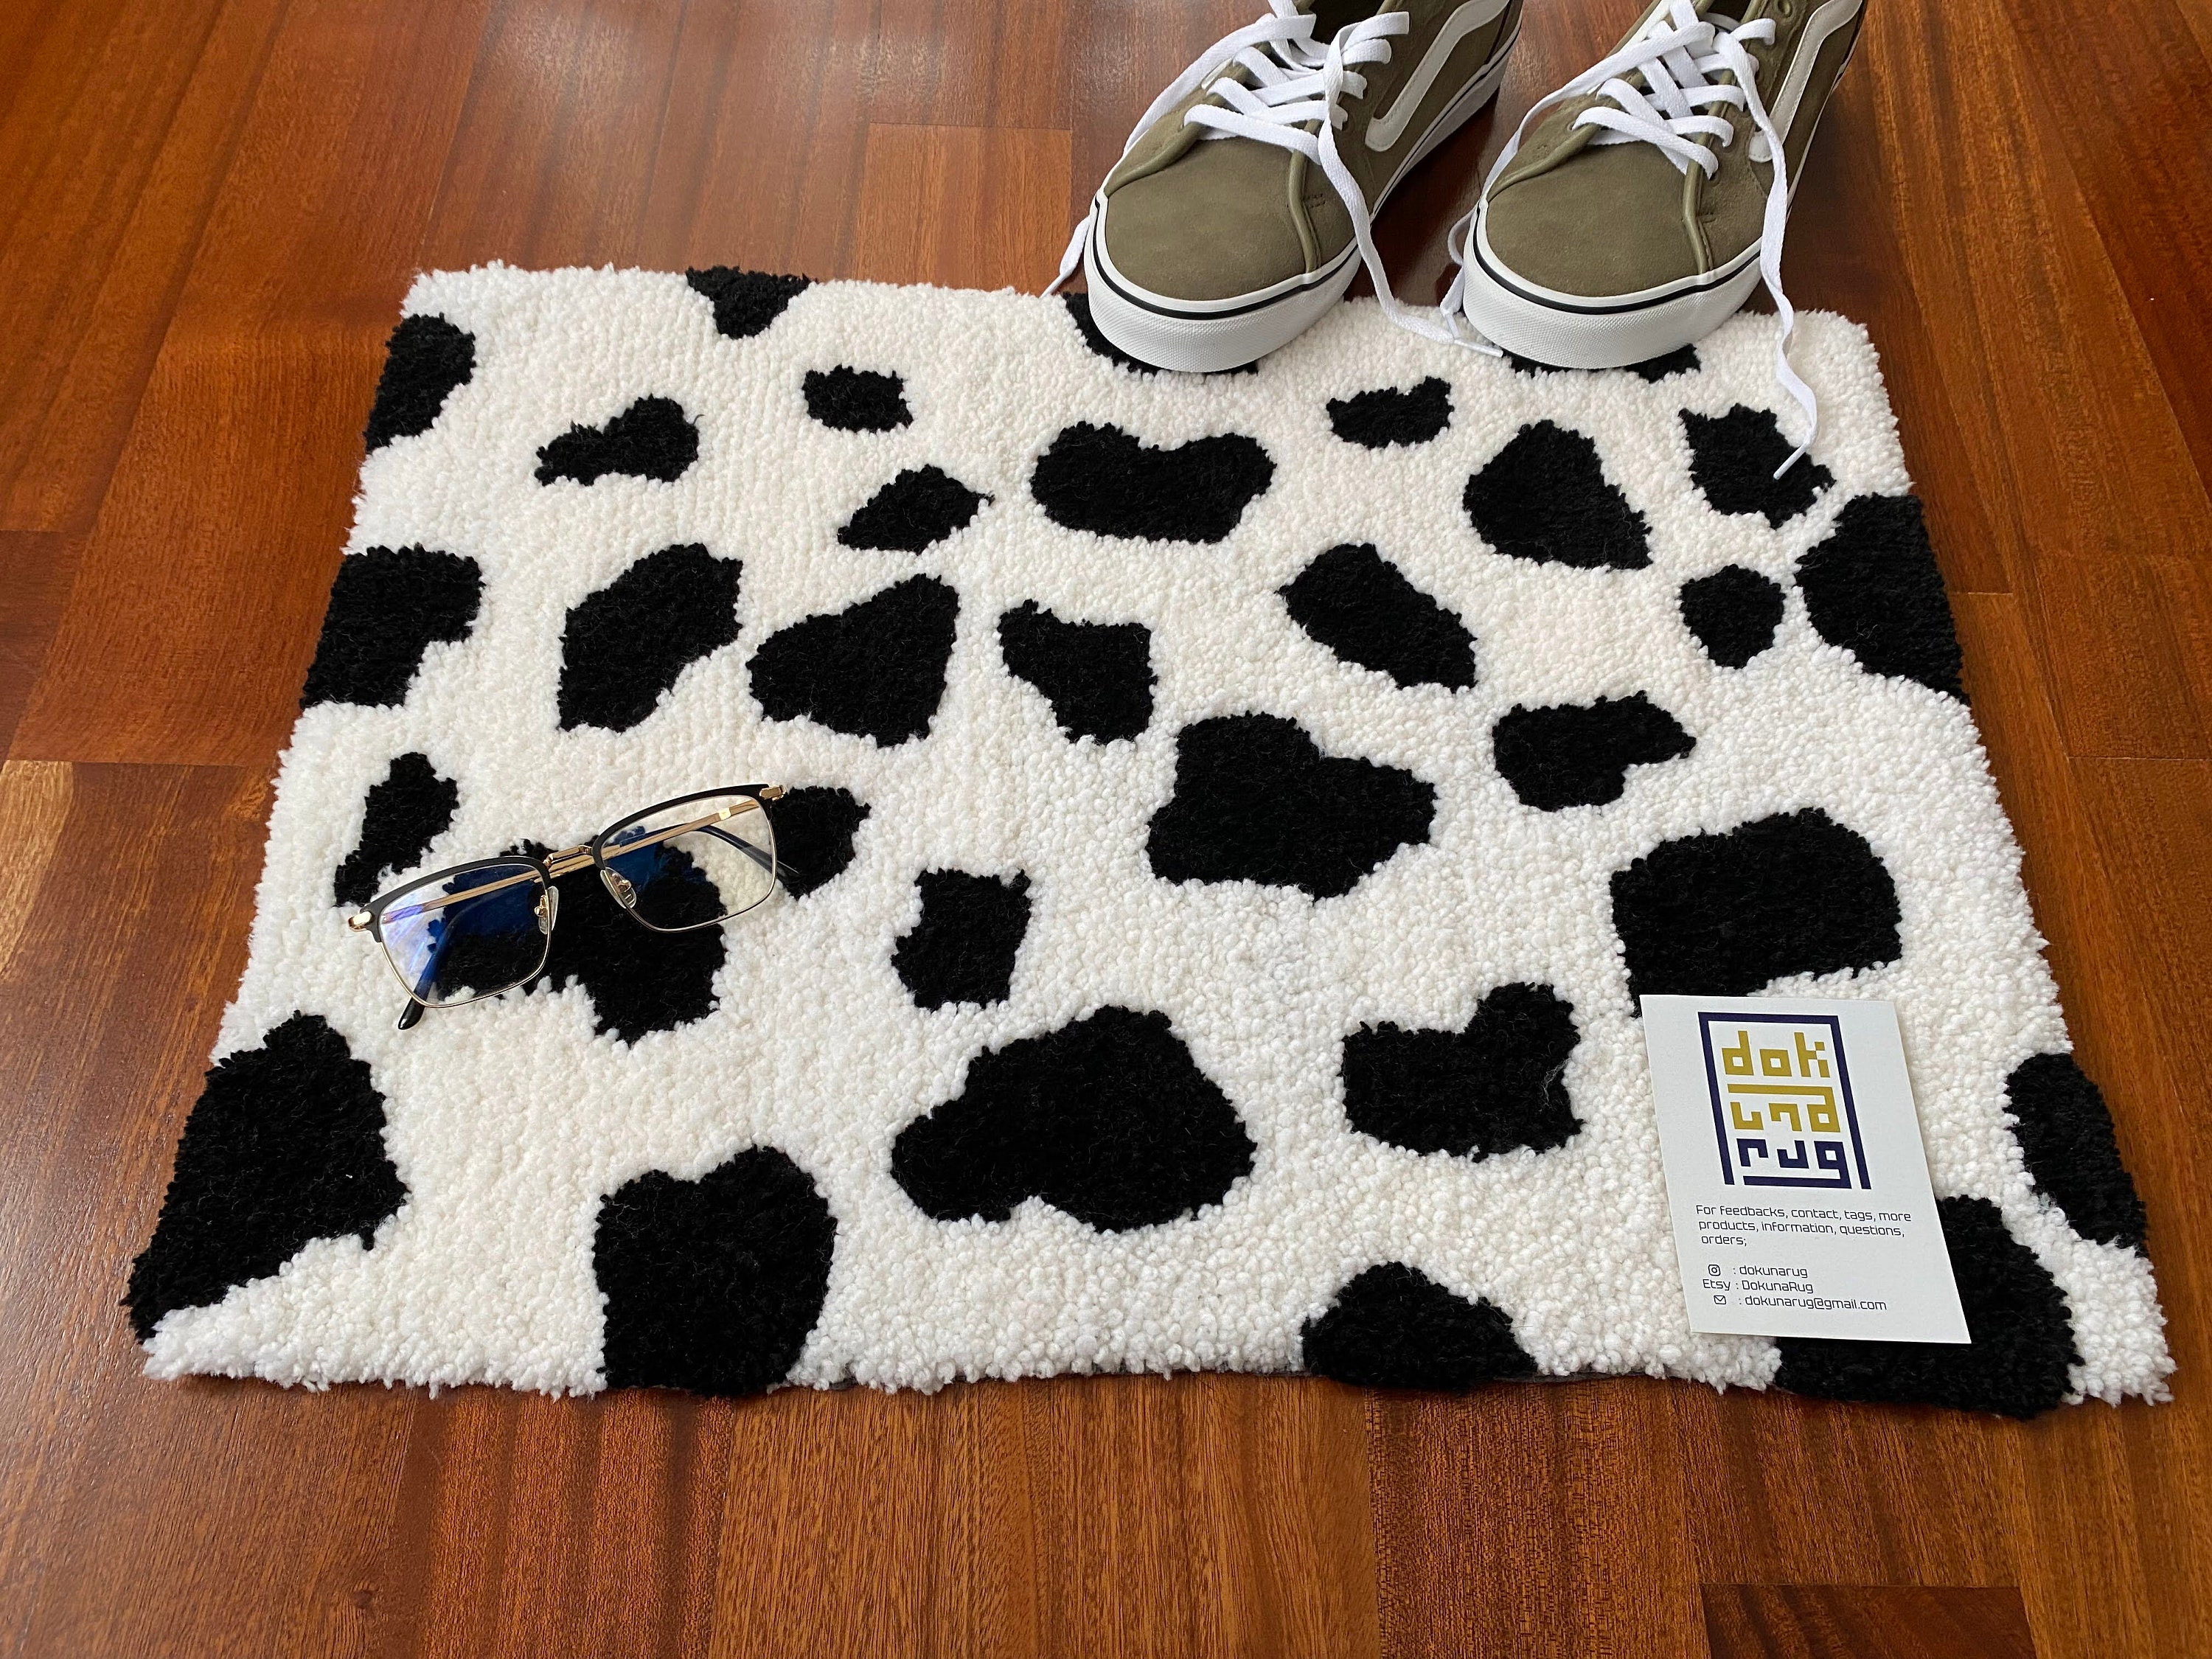 Eleanos Household Non-Slip Long Plush Area Rug Faux Fur Soft Floor Mat  Carpet Home Decor 31x47 Inch